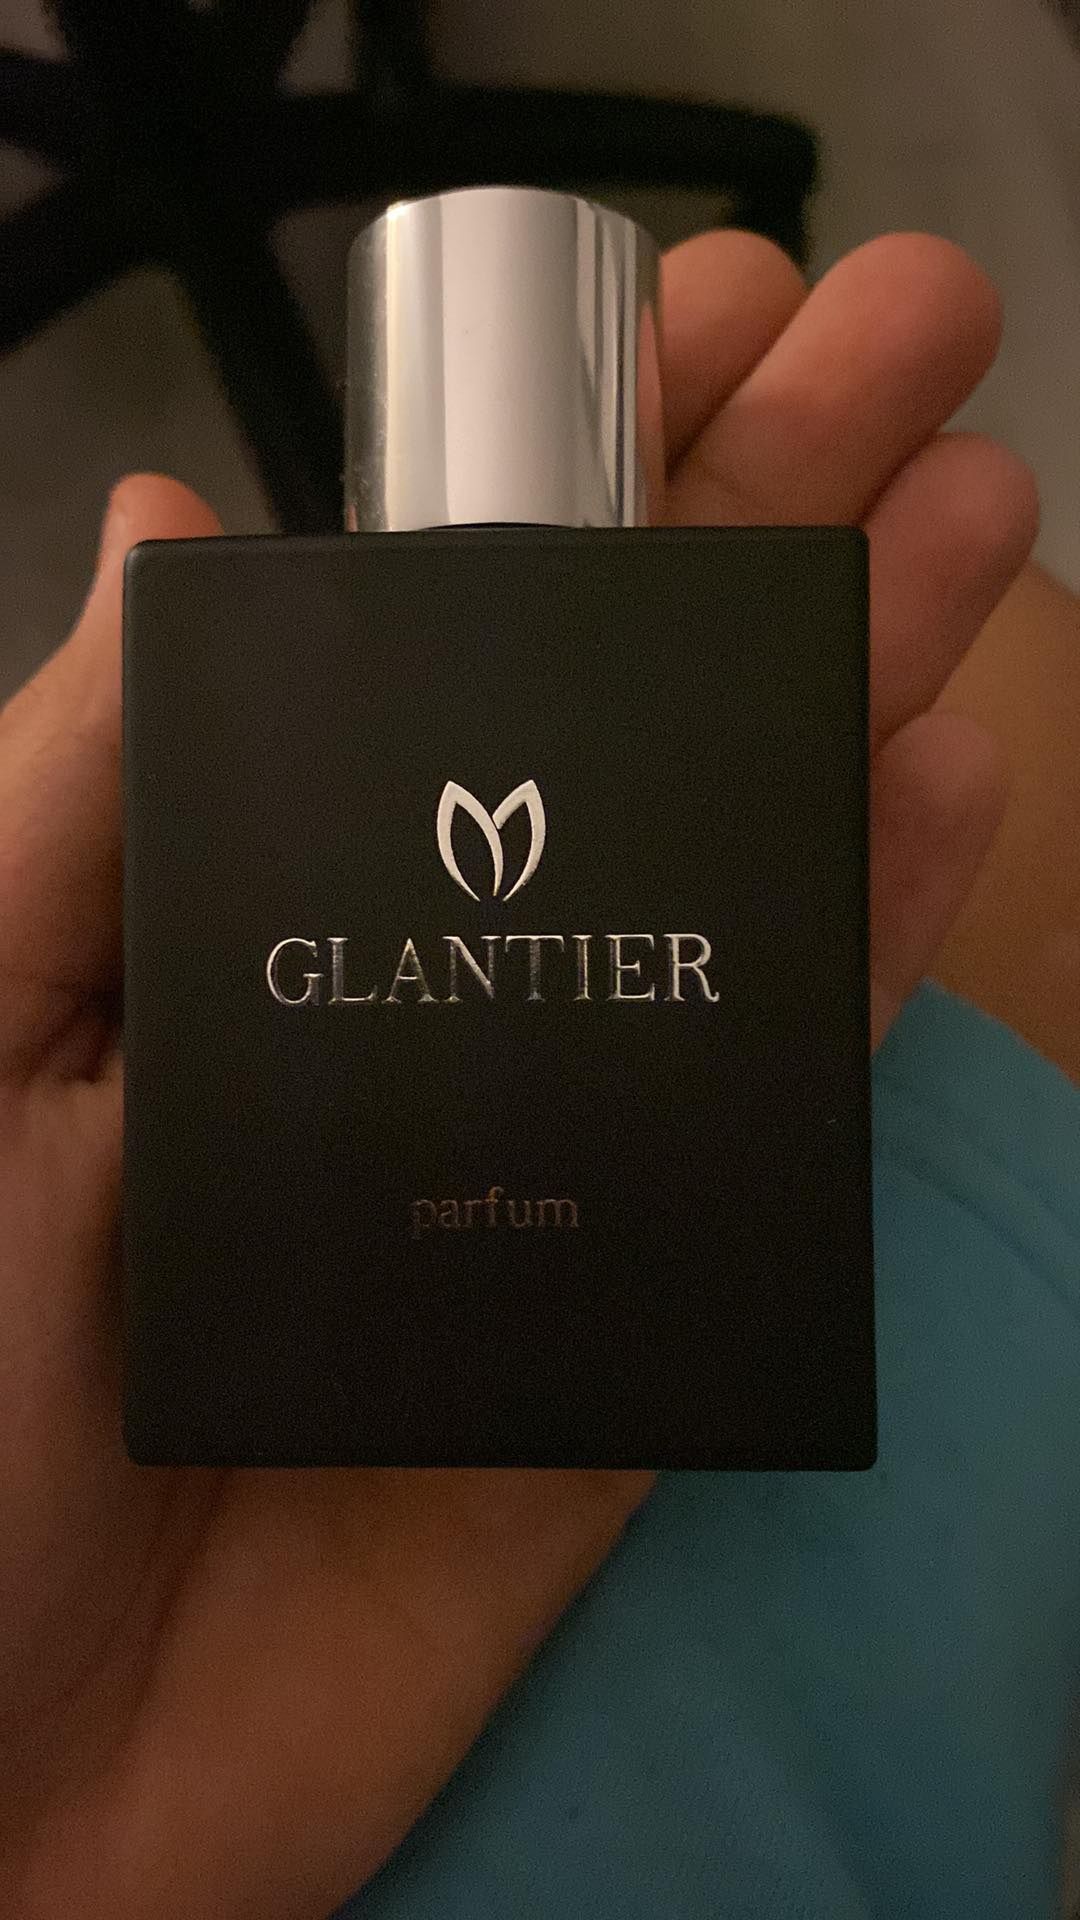 Perfumy Glantier